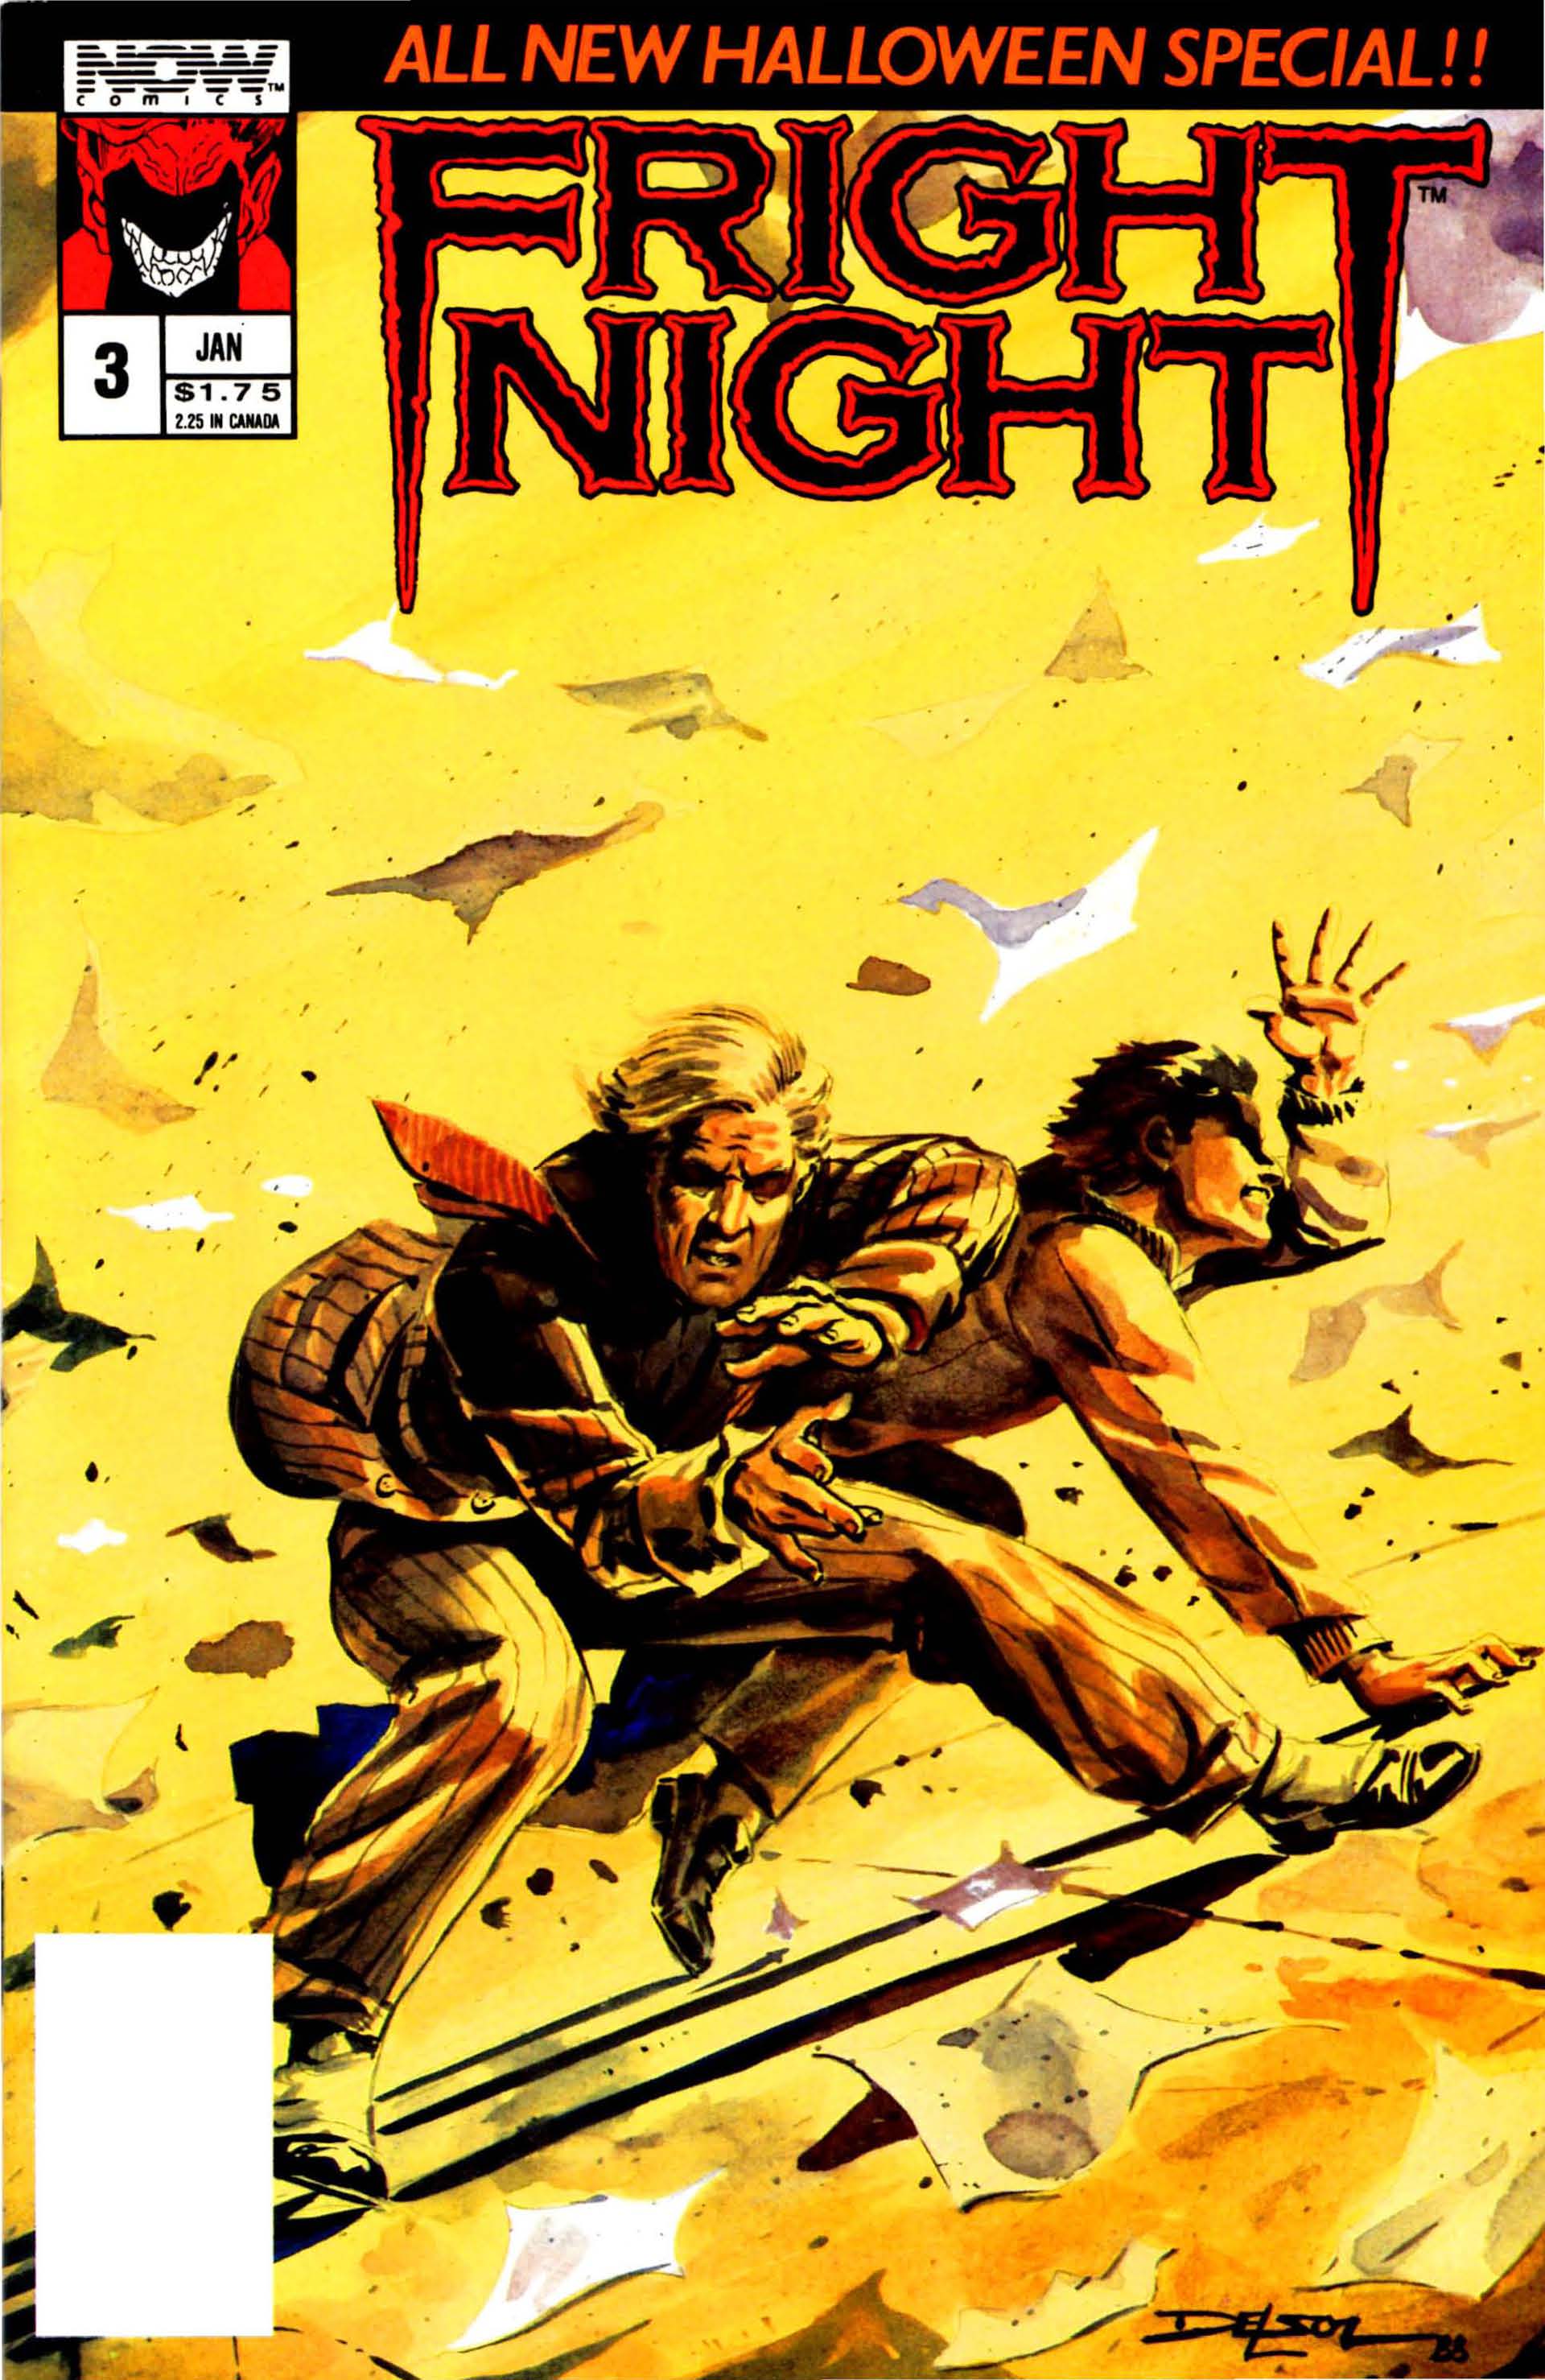 Fright Night Comics | Fright Night Wiki | Fandom powered by Wikia